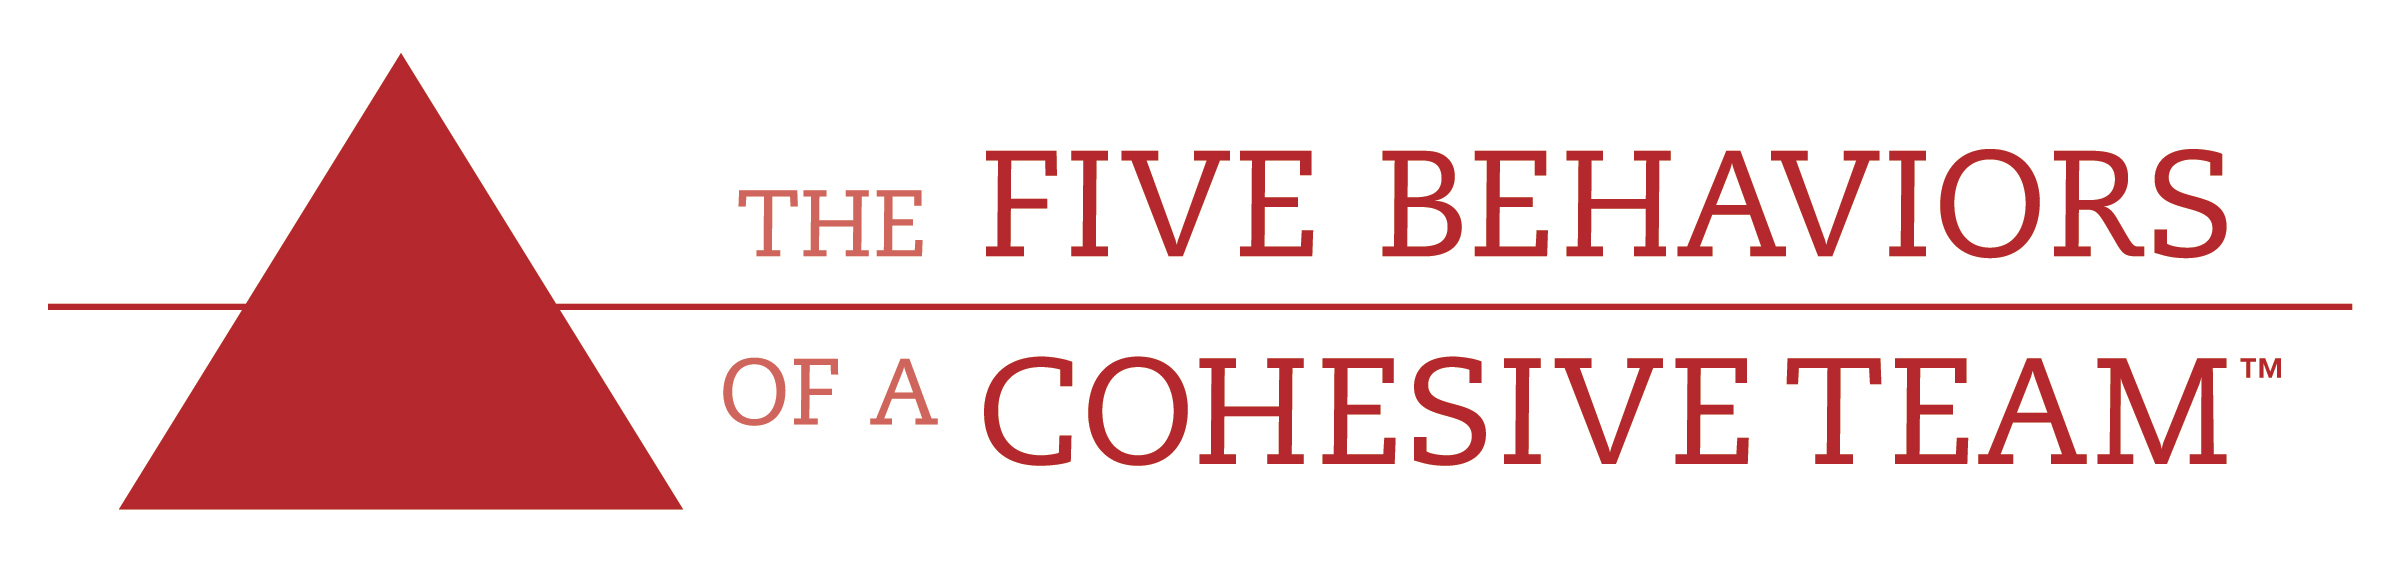 the five behaviors of a cohesive team logo